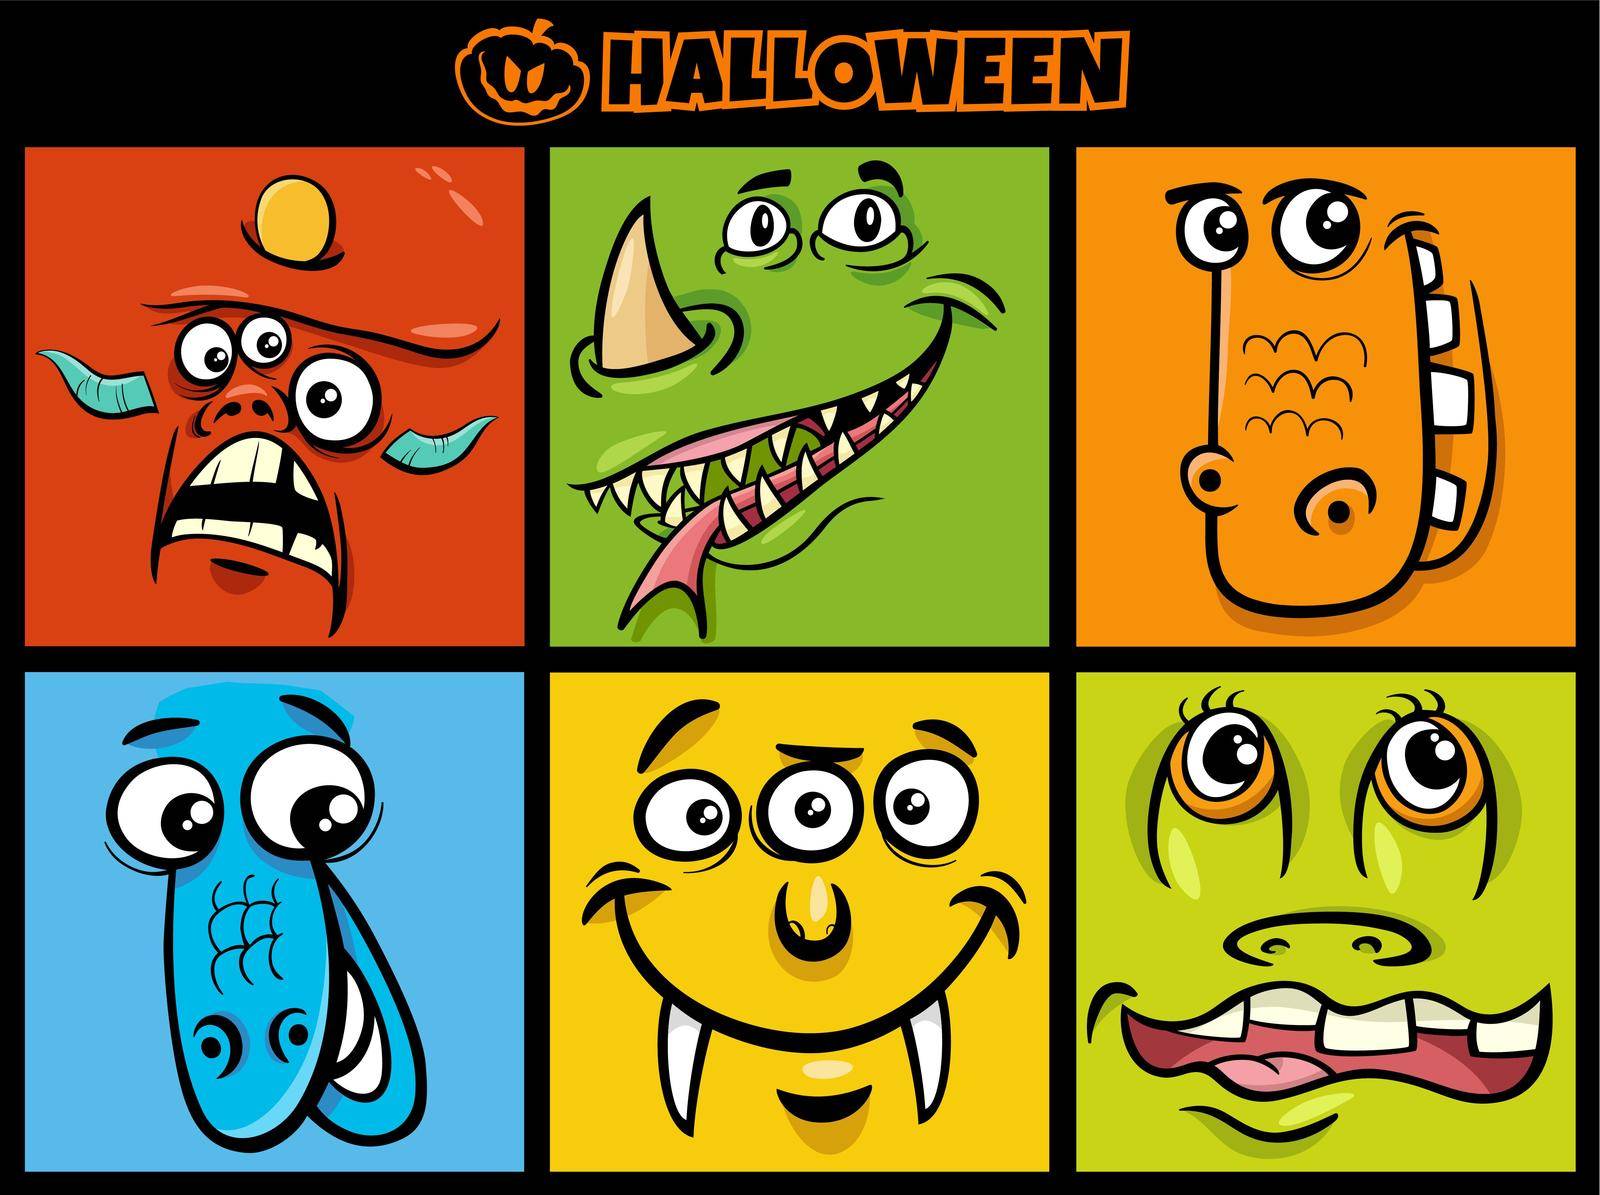 Halloween holiday cartoon monsters characters set by izakowski